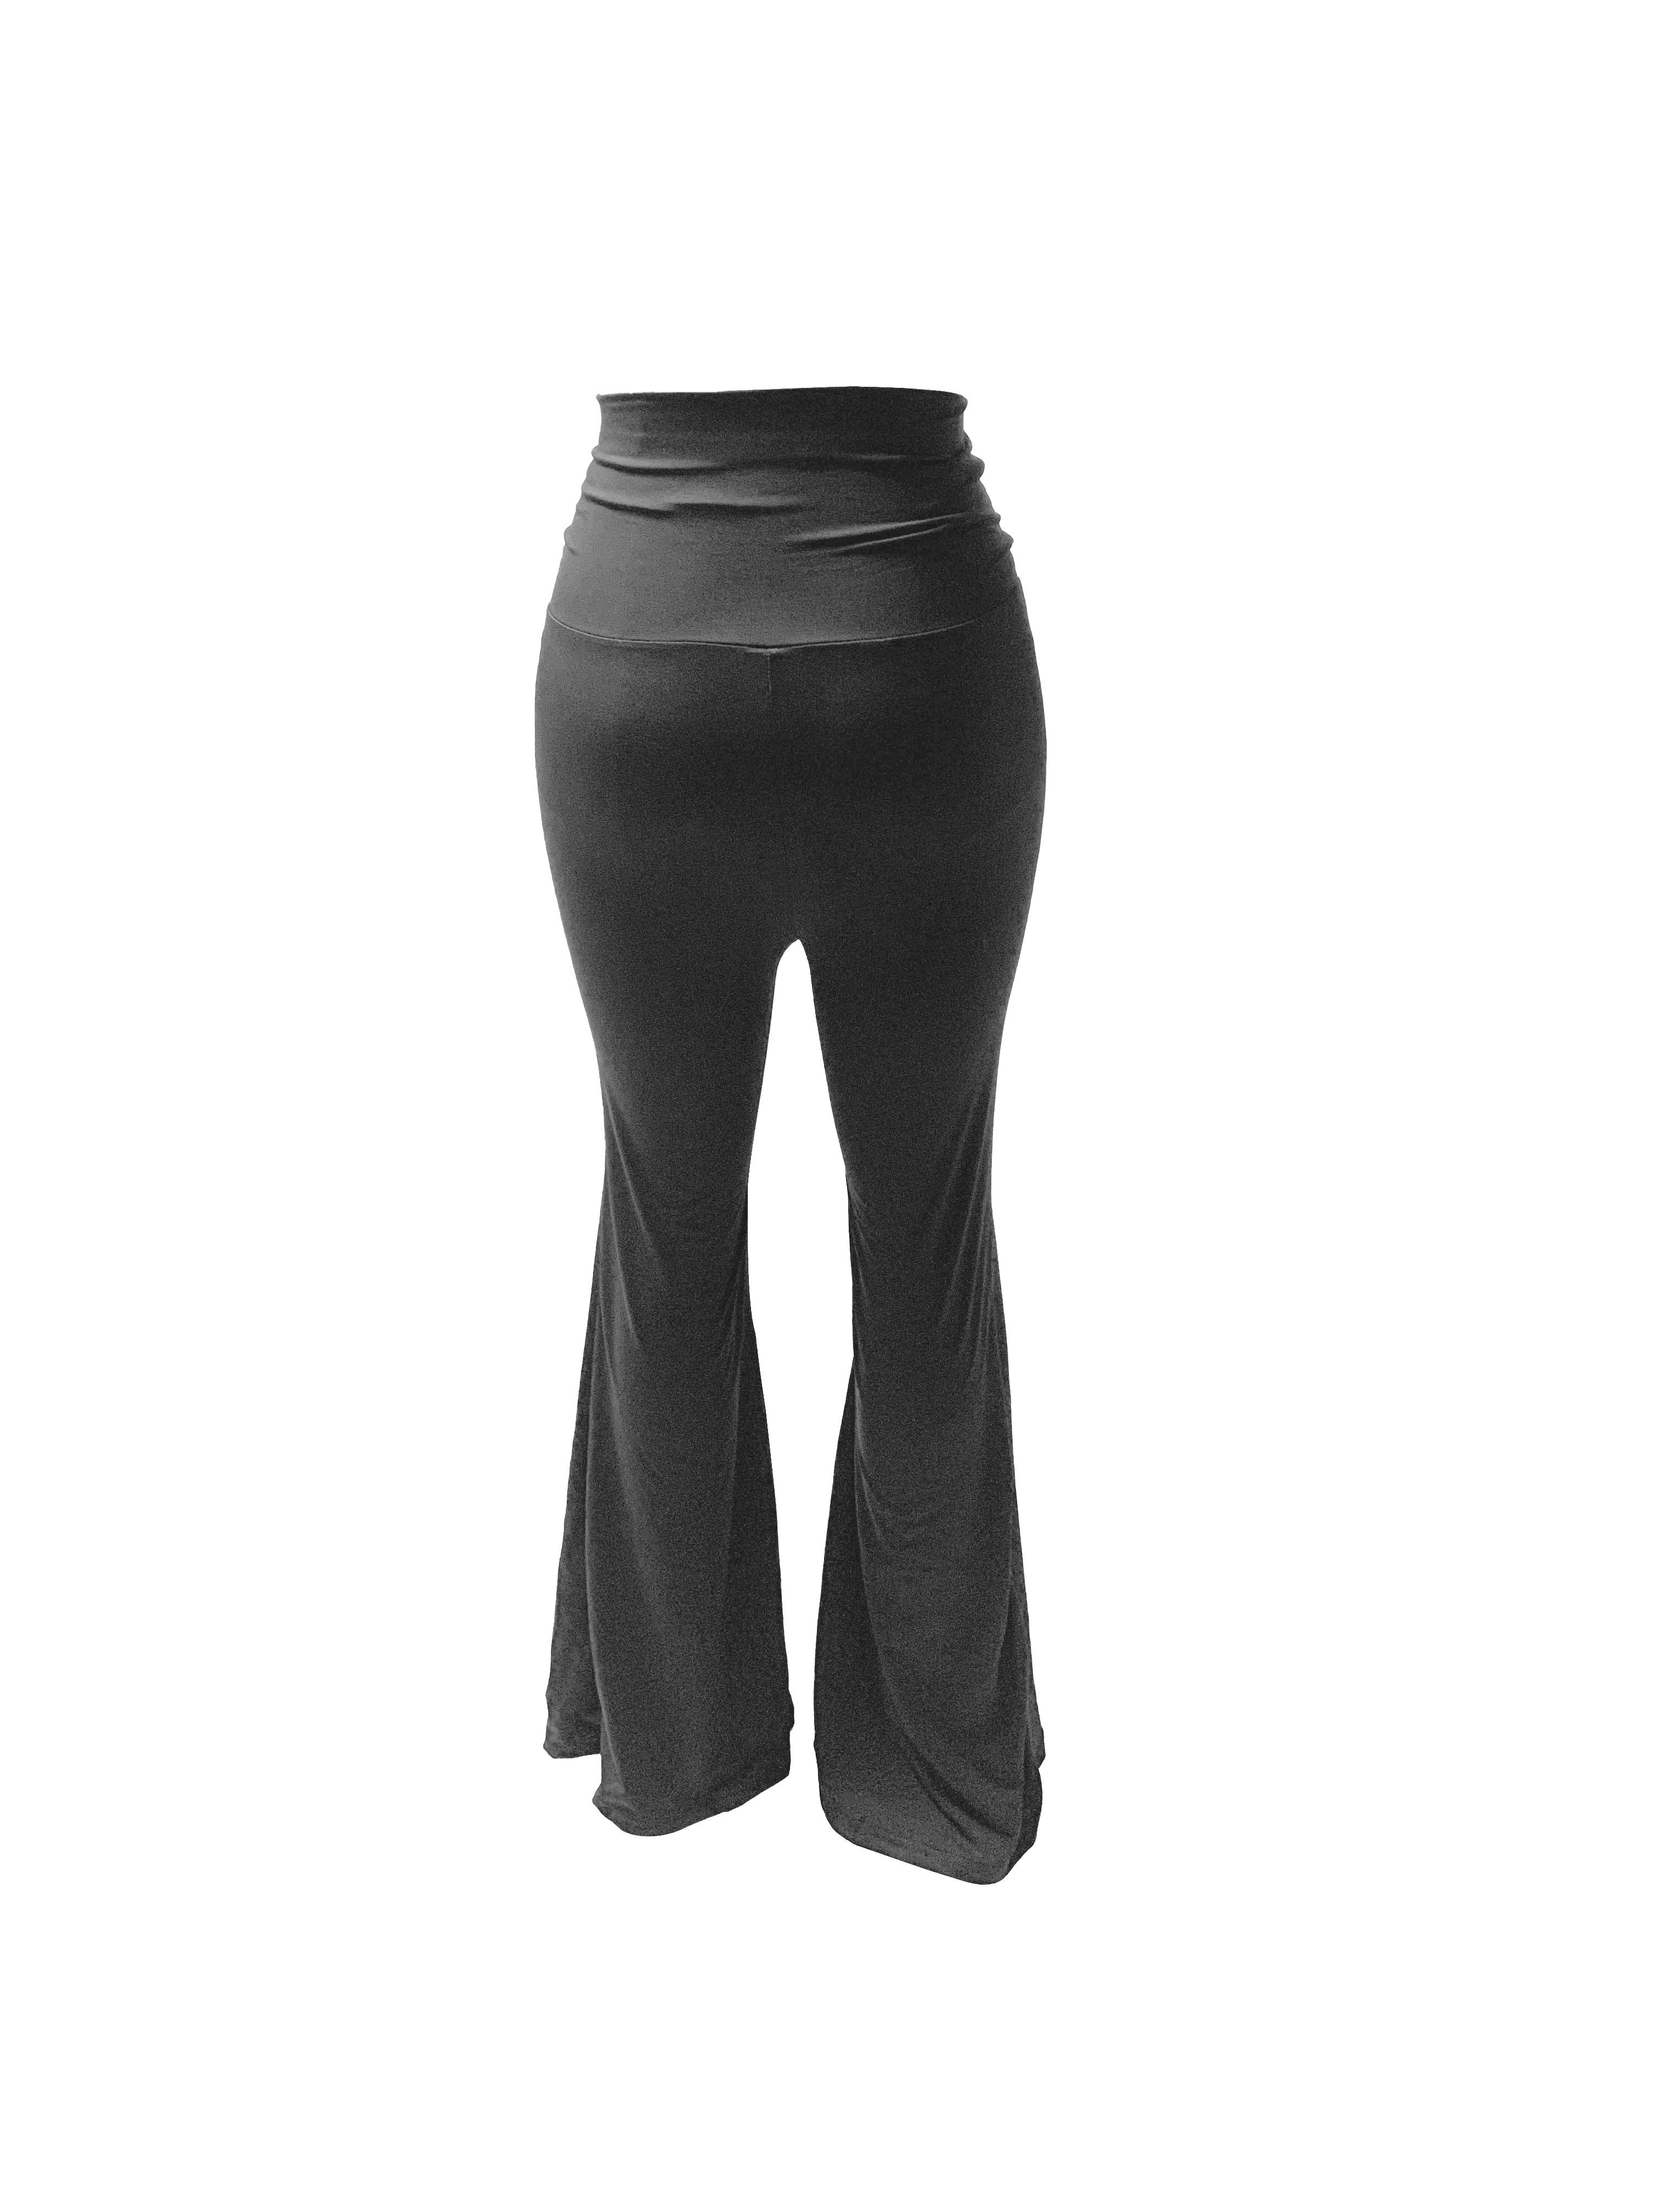 Black Pants Bell-Bottom High Flare Elastic Trousers Yoga Dance Pants Women  Skinny Black Dress Pants for Women